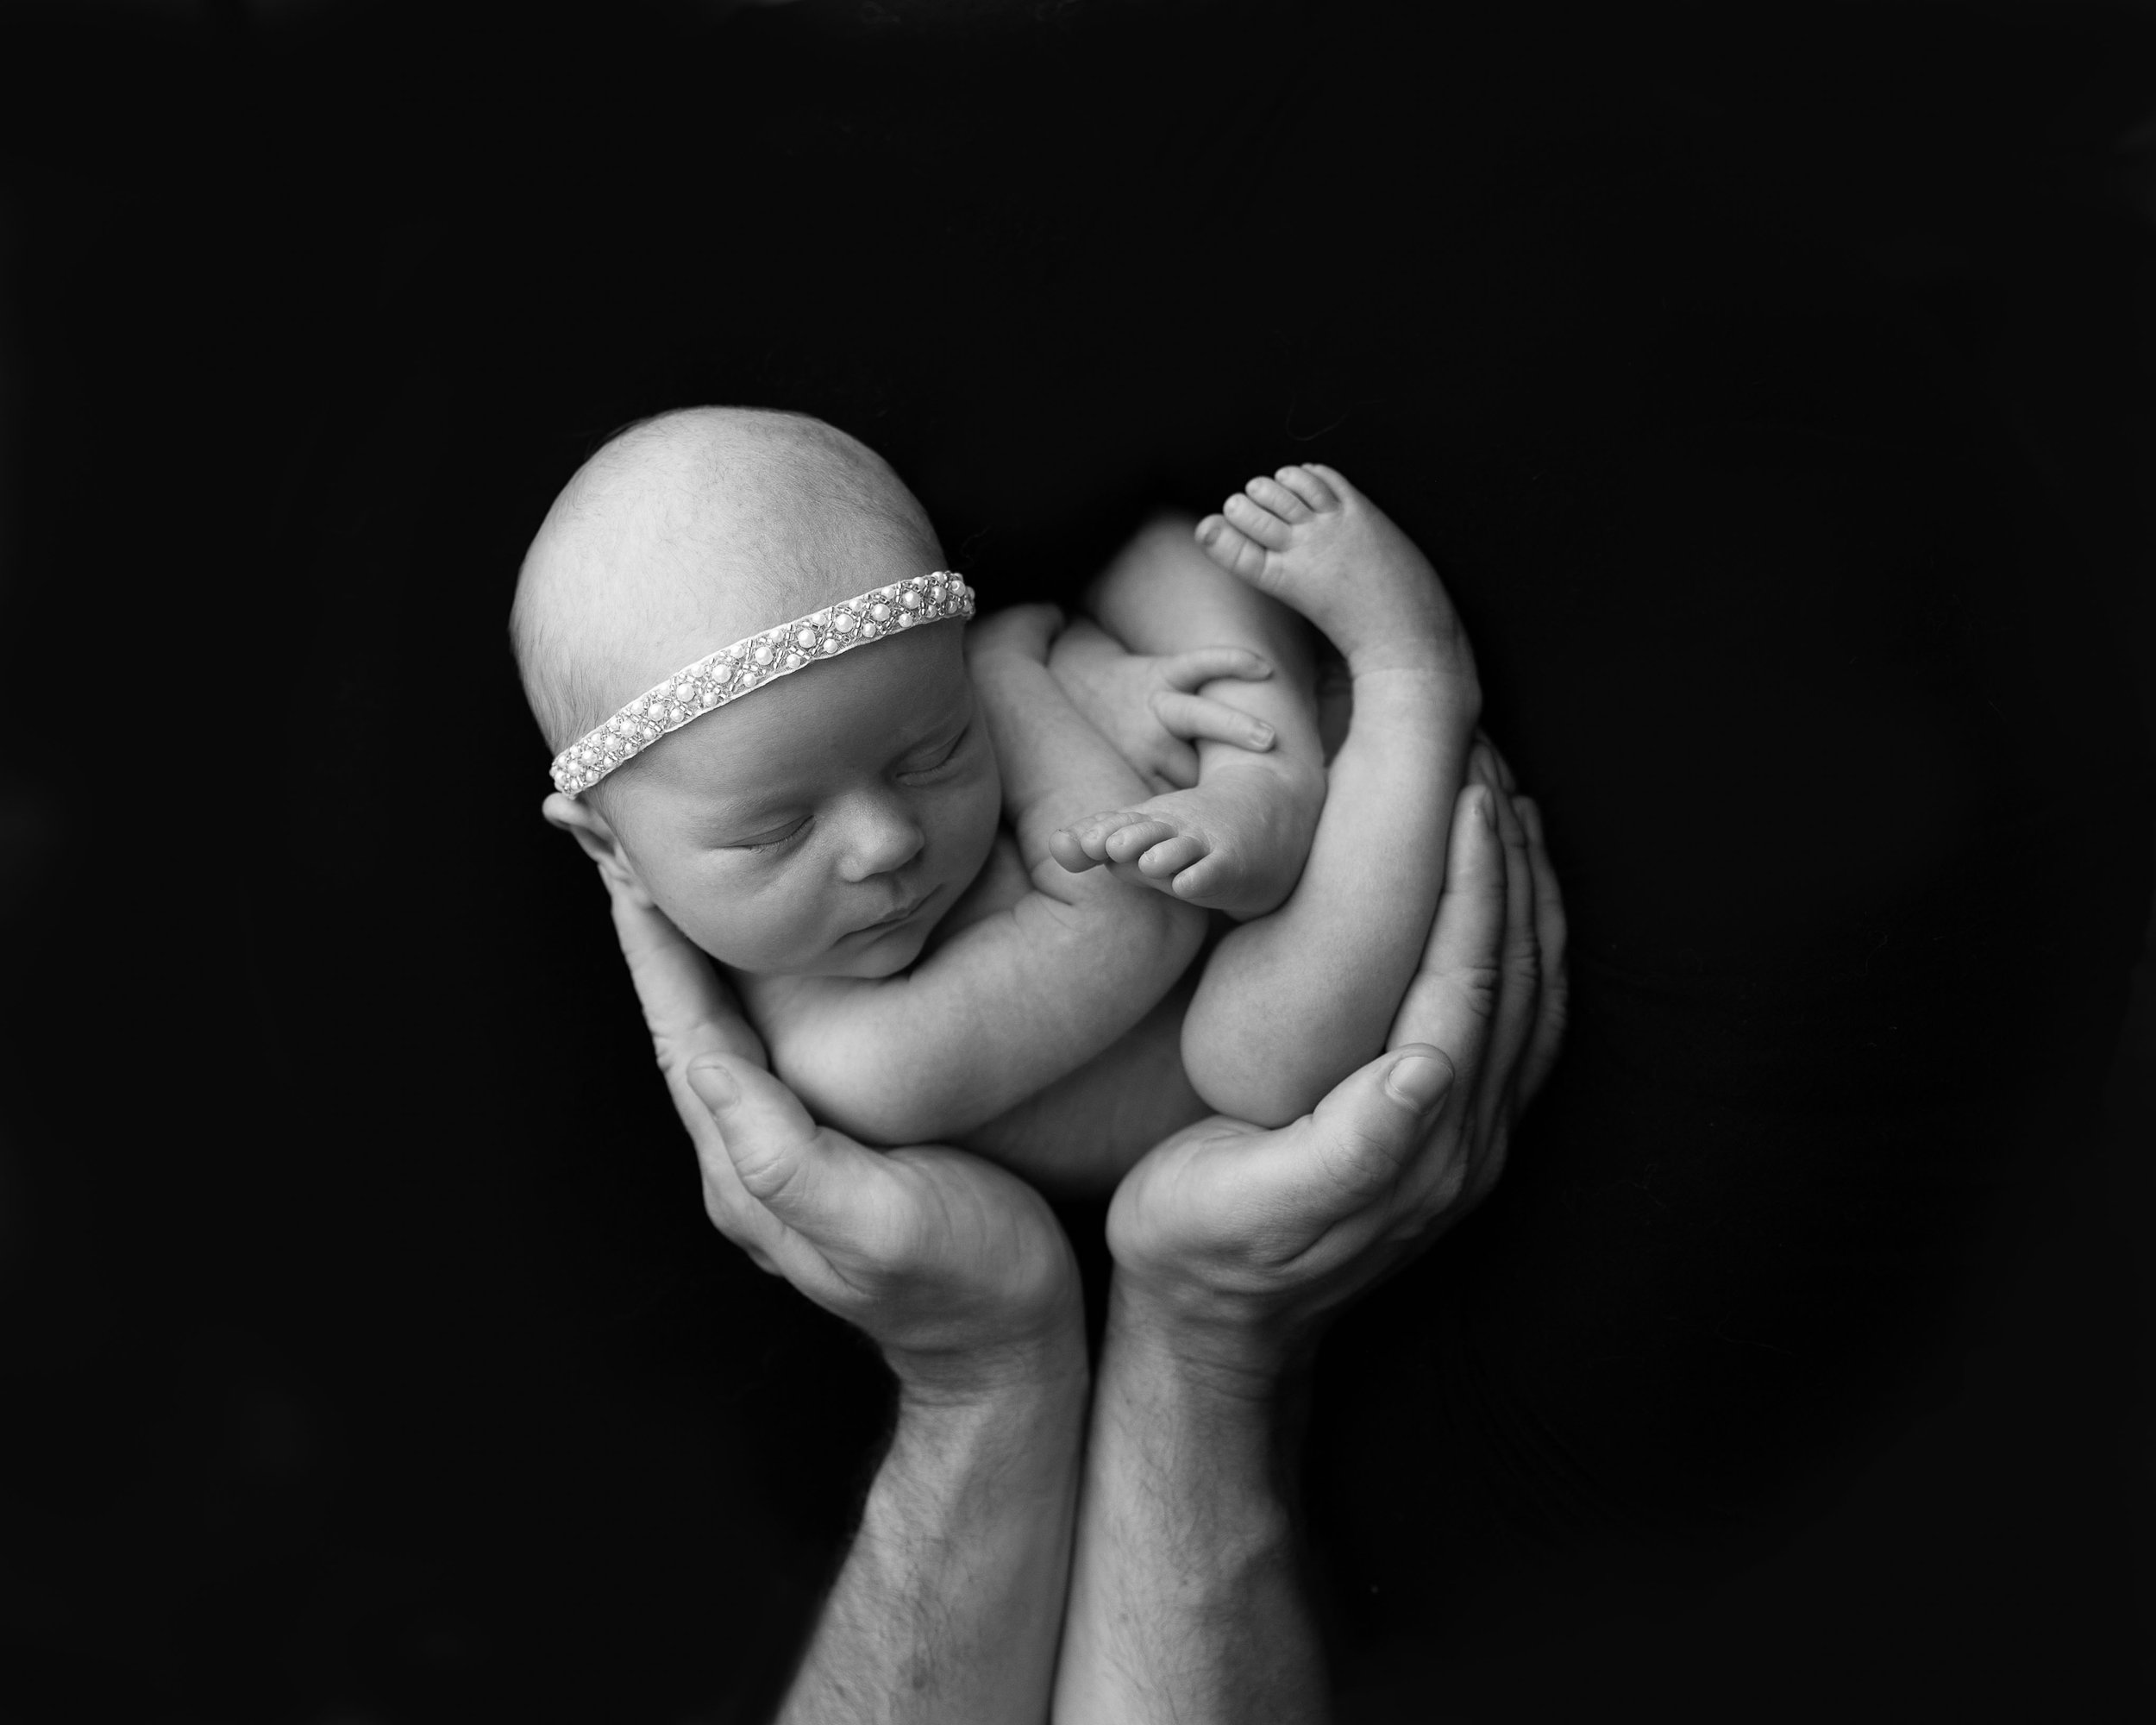 Baby-girl-photos-infant-images-Newborn-Photography-spokane-washinton-6.jpg